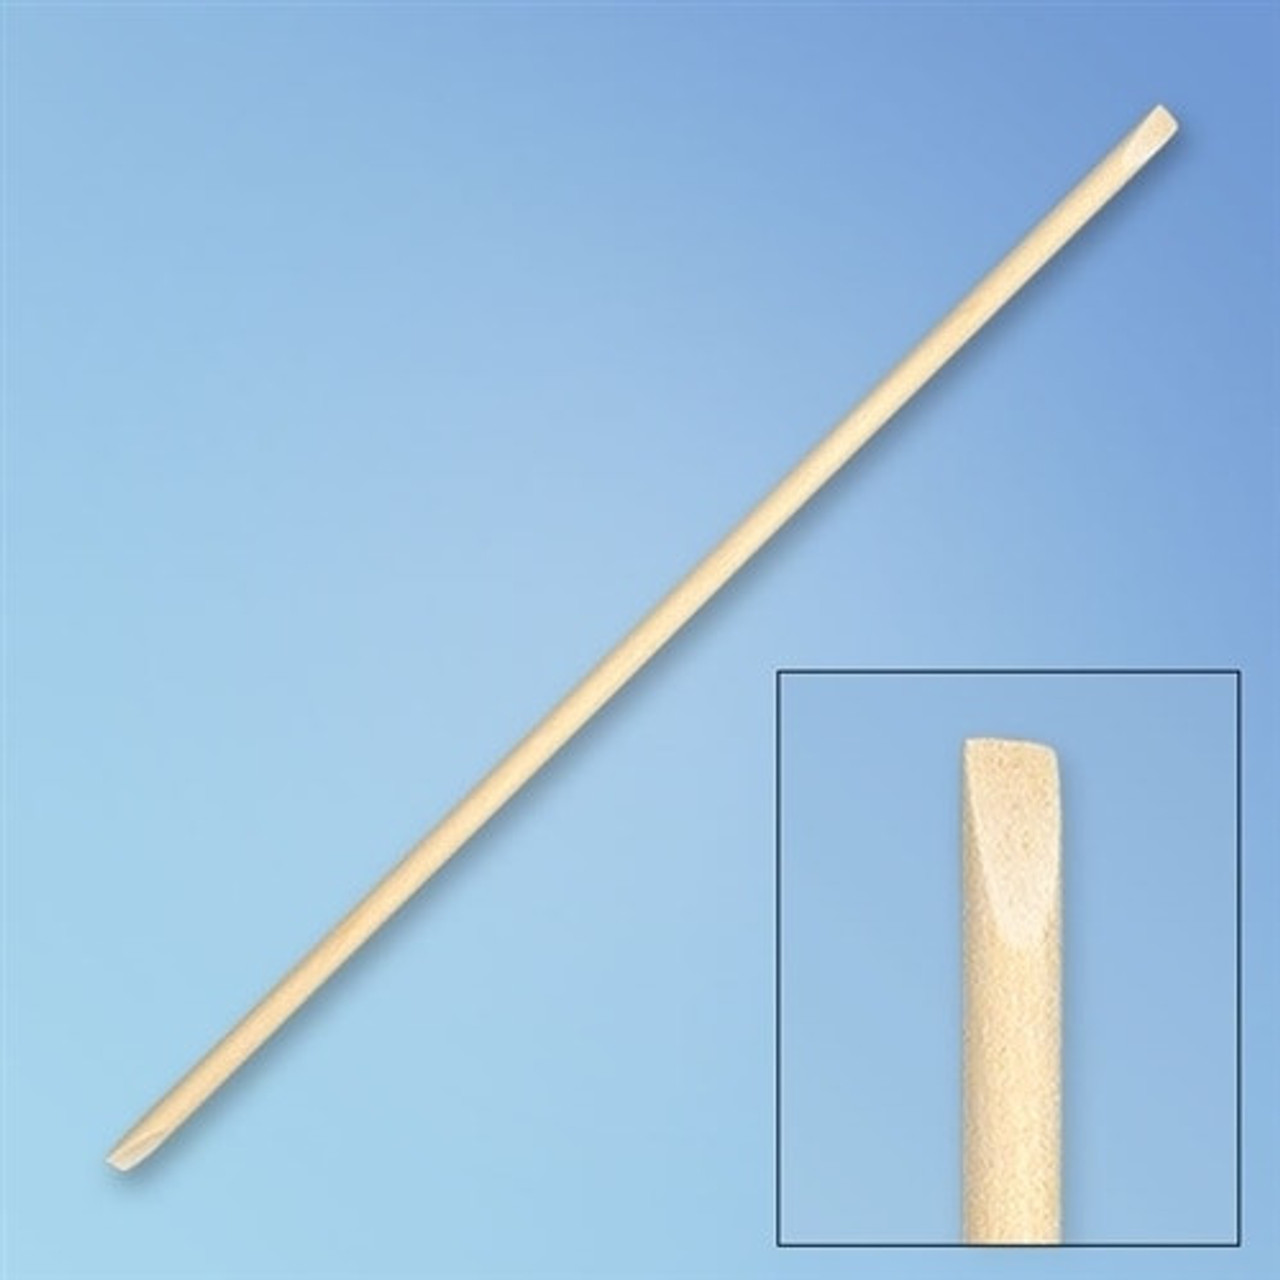 3 Uses of Orange Sticks and Cuticle Sticks - Harmony Lab & Safety